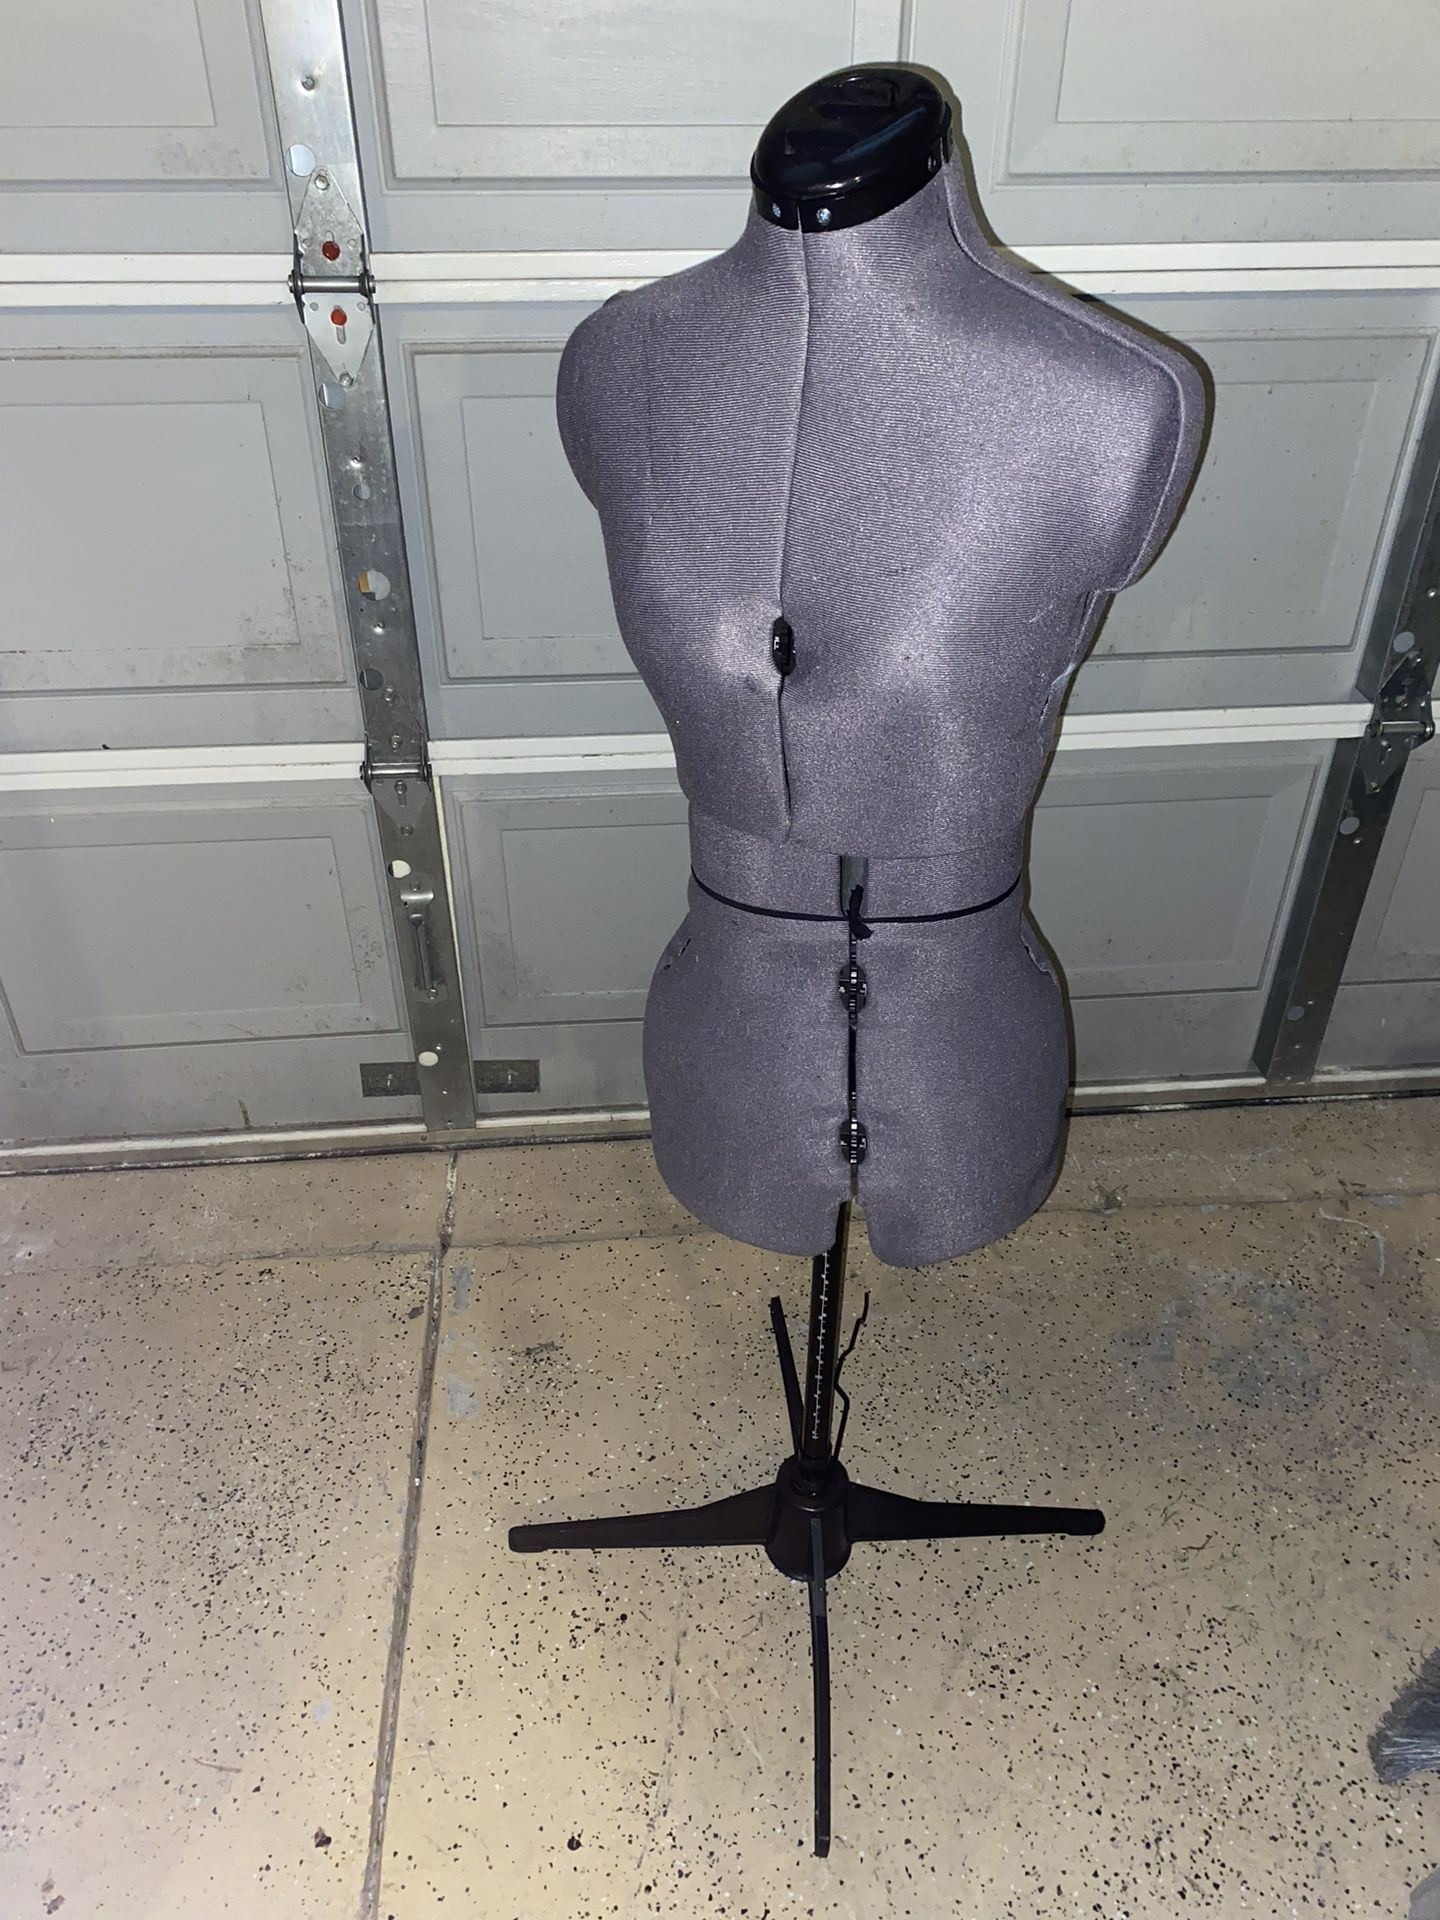 Adjustable Sewing Mannequin 